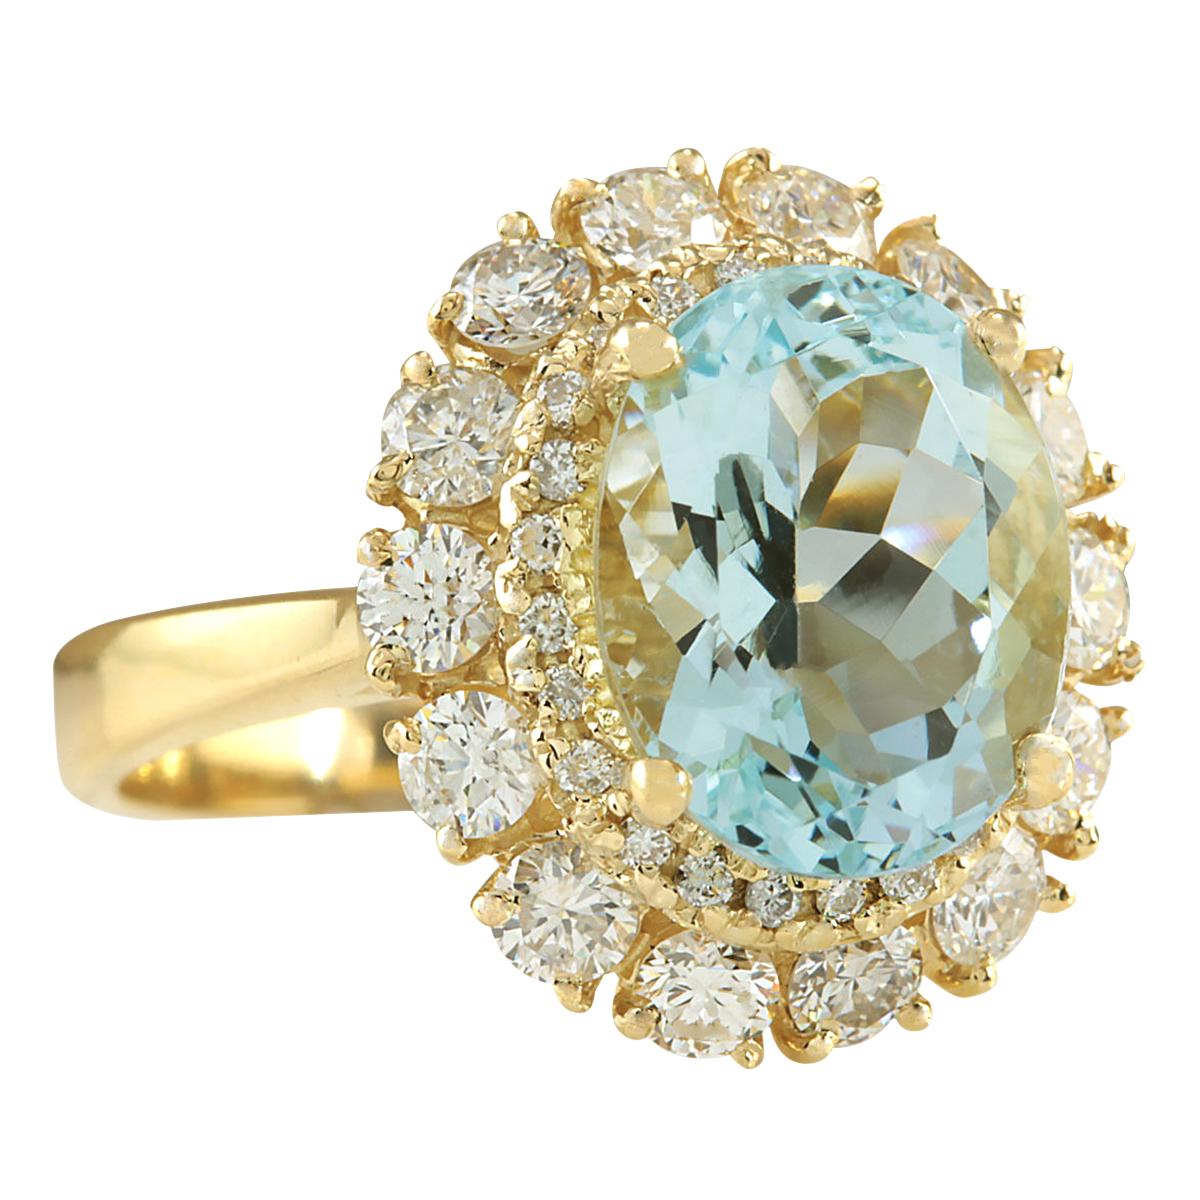 5.15 Carat Natural Aquamarine 14 Karat Yellow Gold Diamond Ring
Stamped: 14K Yellow Gold
Total Ring Weight: 5.3 Grams
Total Natural Aquamarine Weight is 3.65 Carat (Measures: 11.00x9.00 mm)
Color: Blue
Total Natural Diamond Weight is 1.50